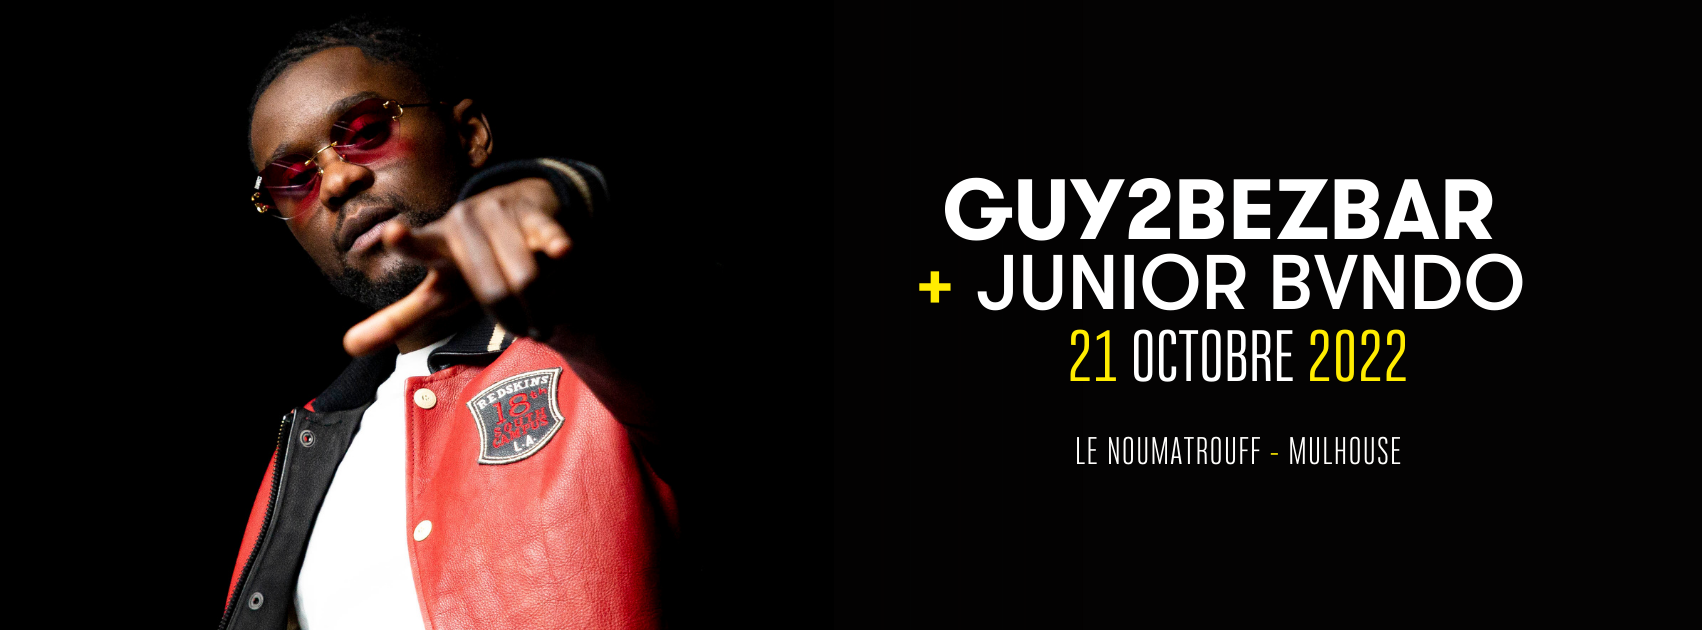 Guy2bezbar + Junior Bvndo